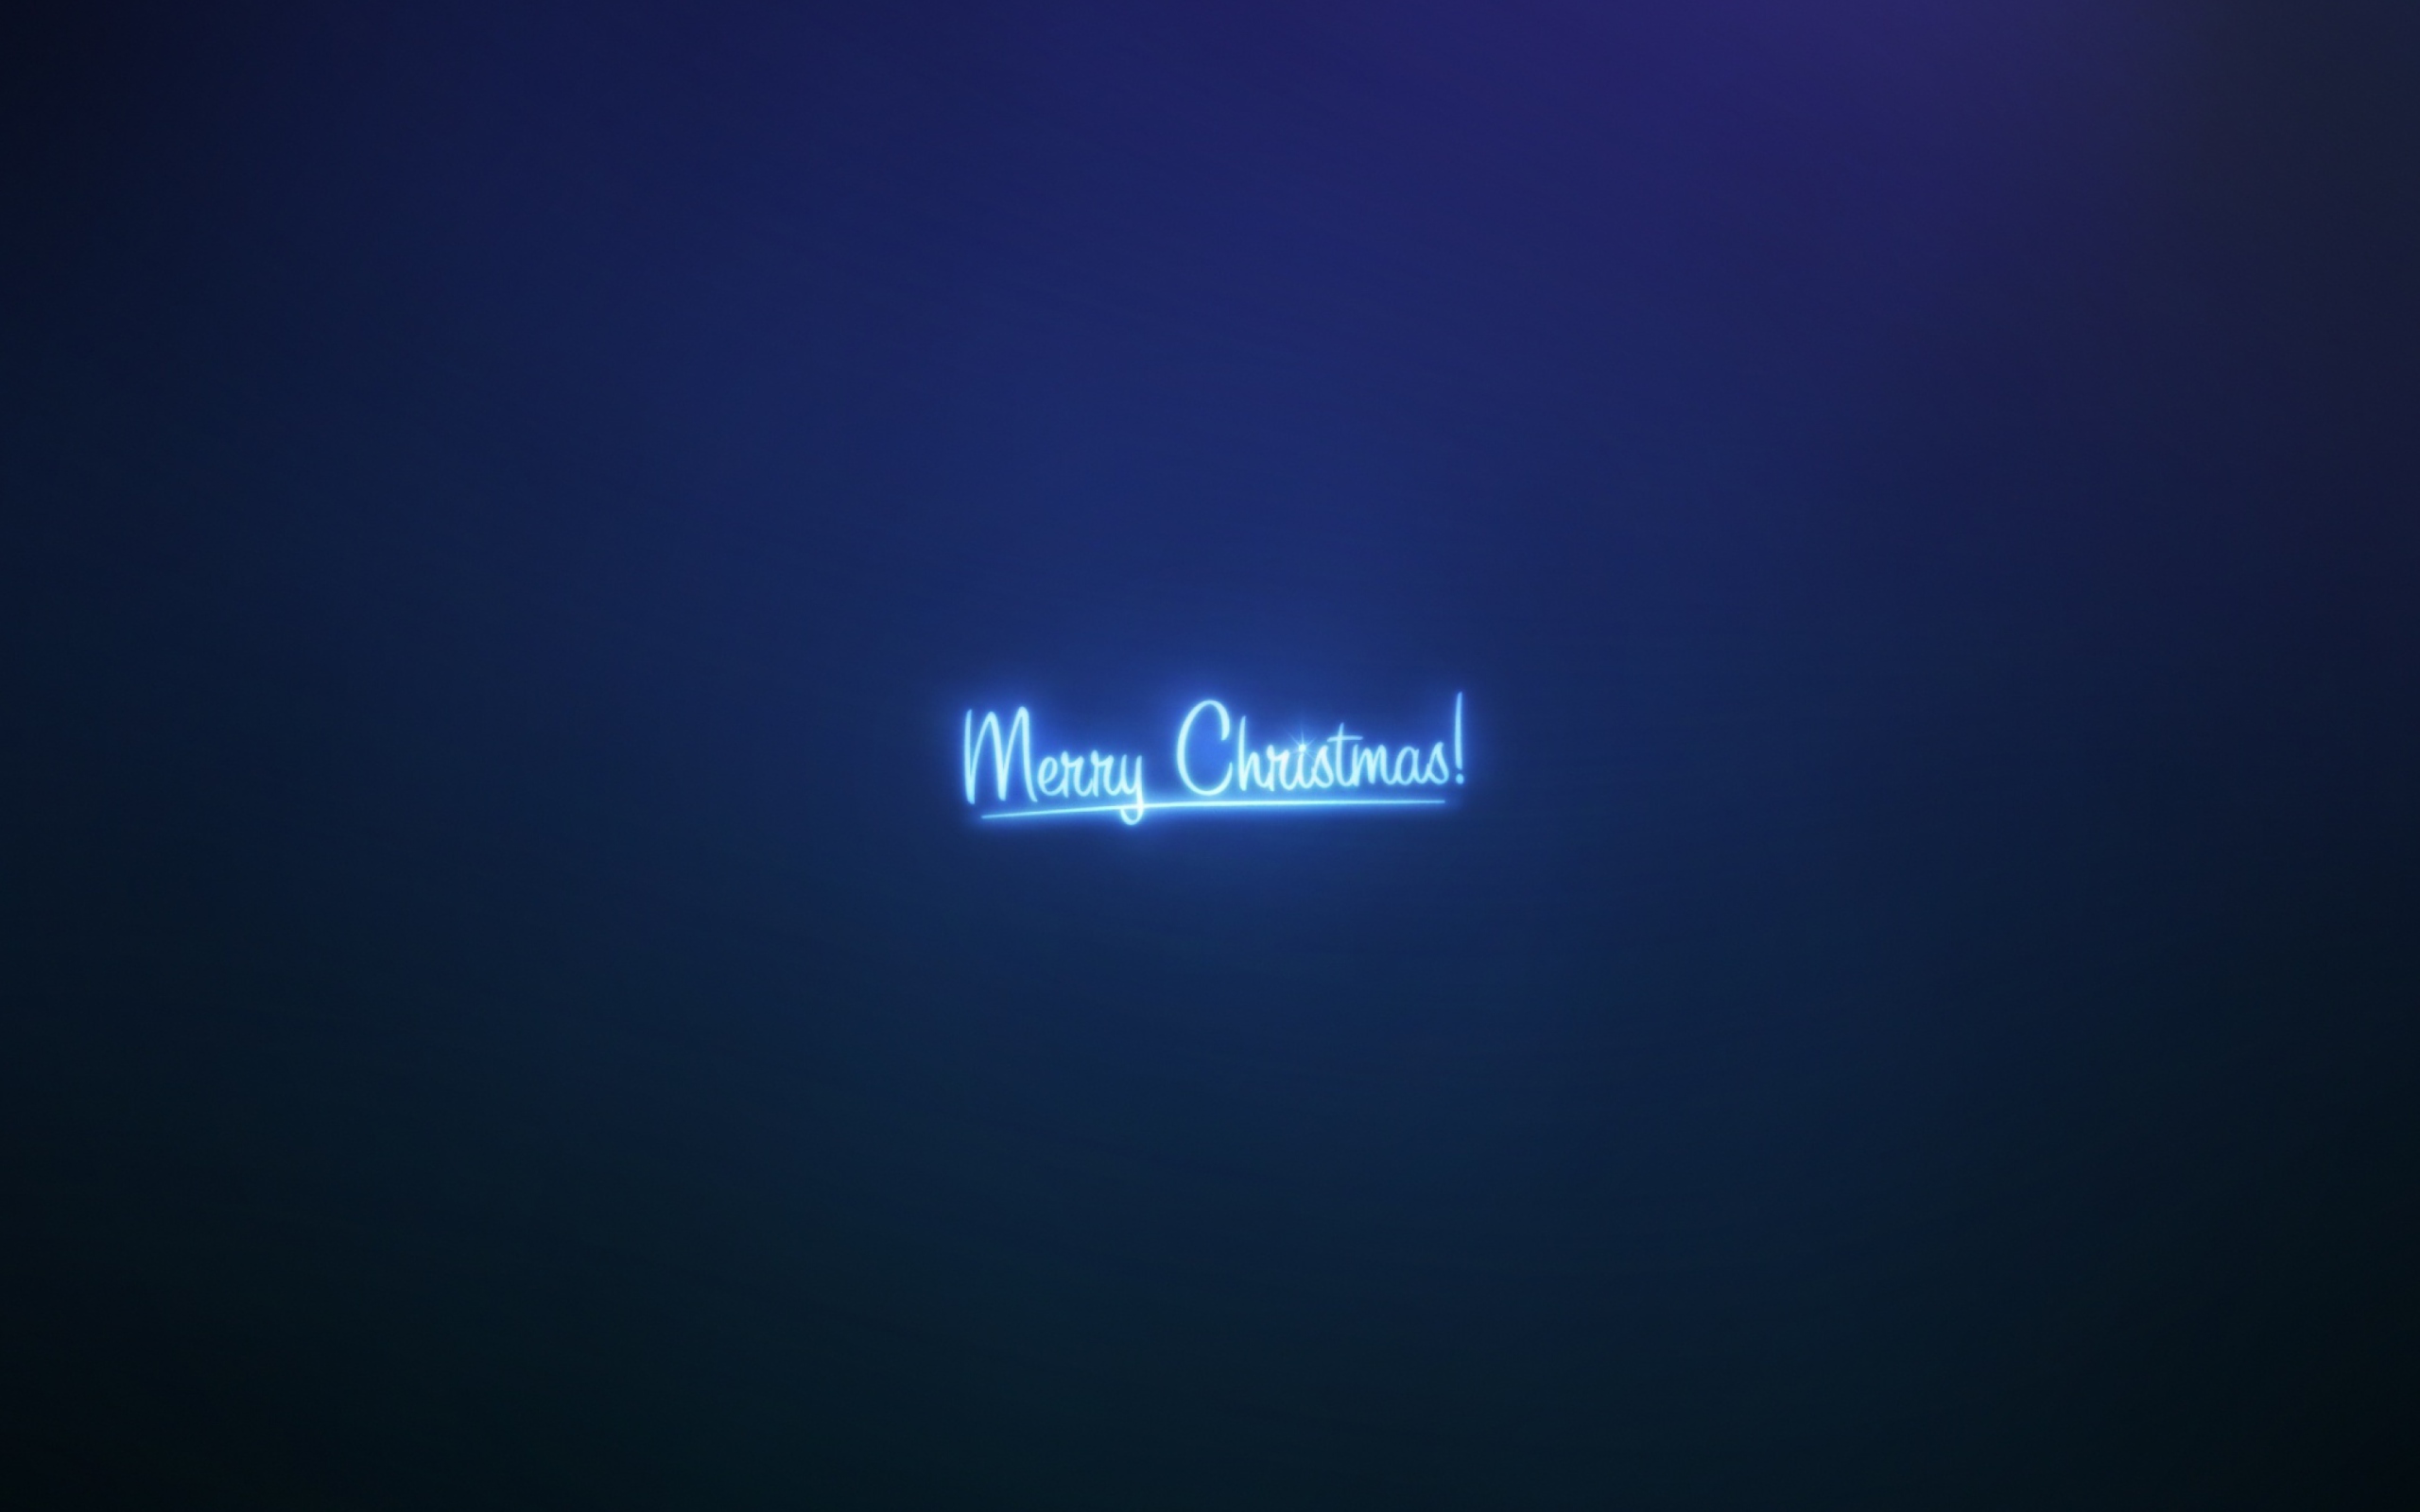 Merry Christmas wallpaper 2560x1600